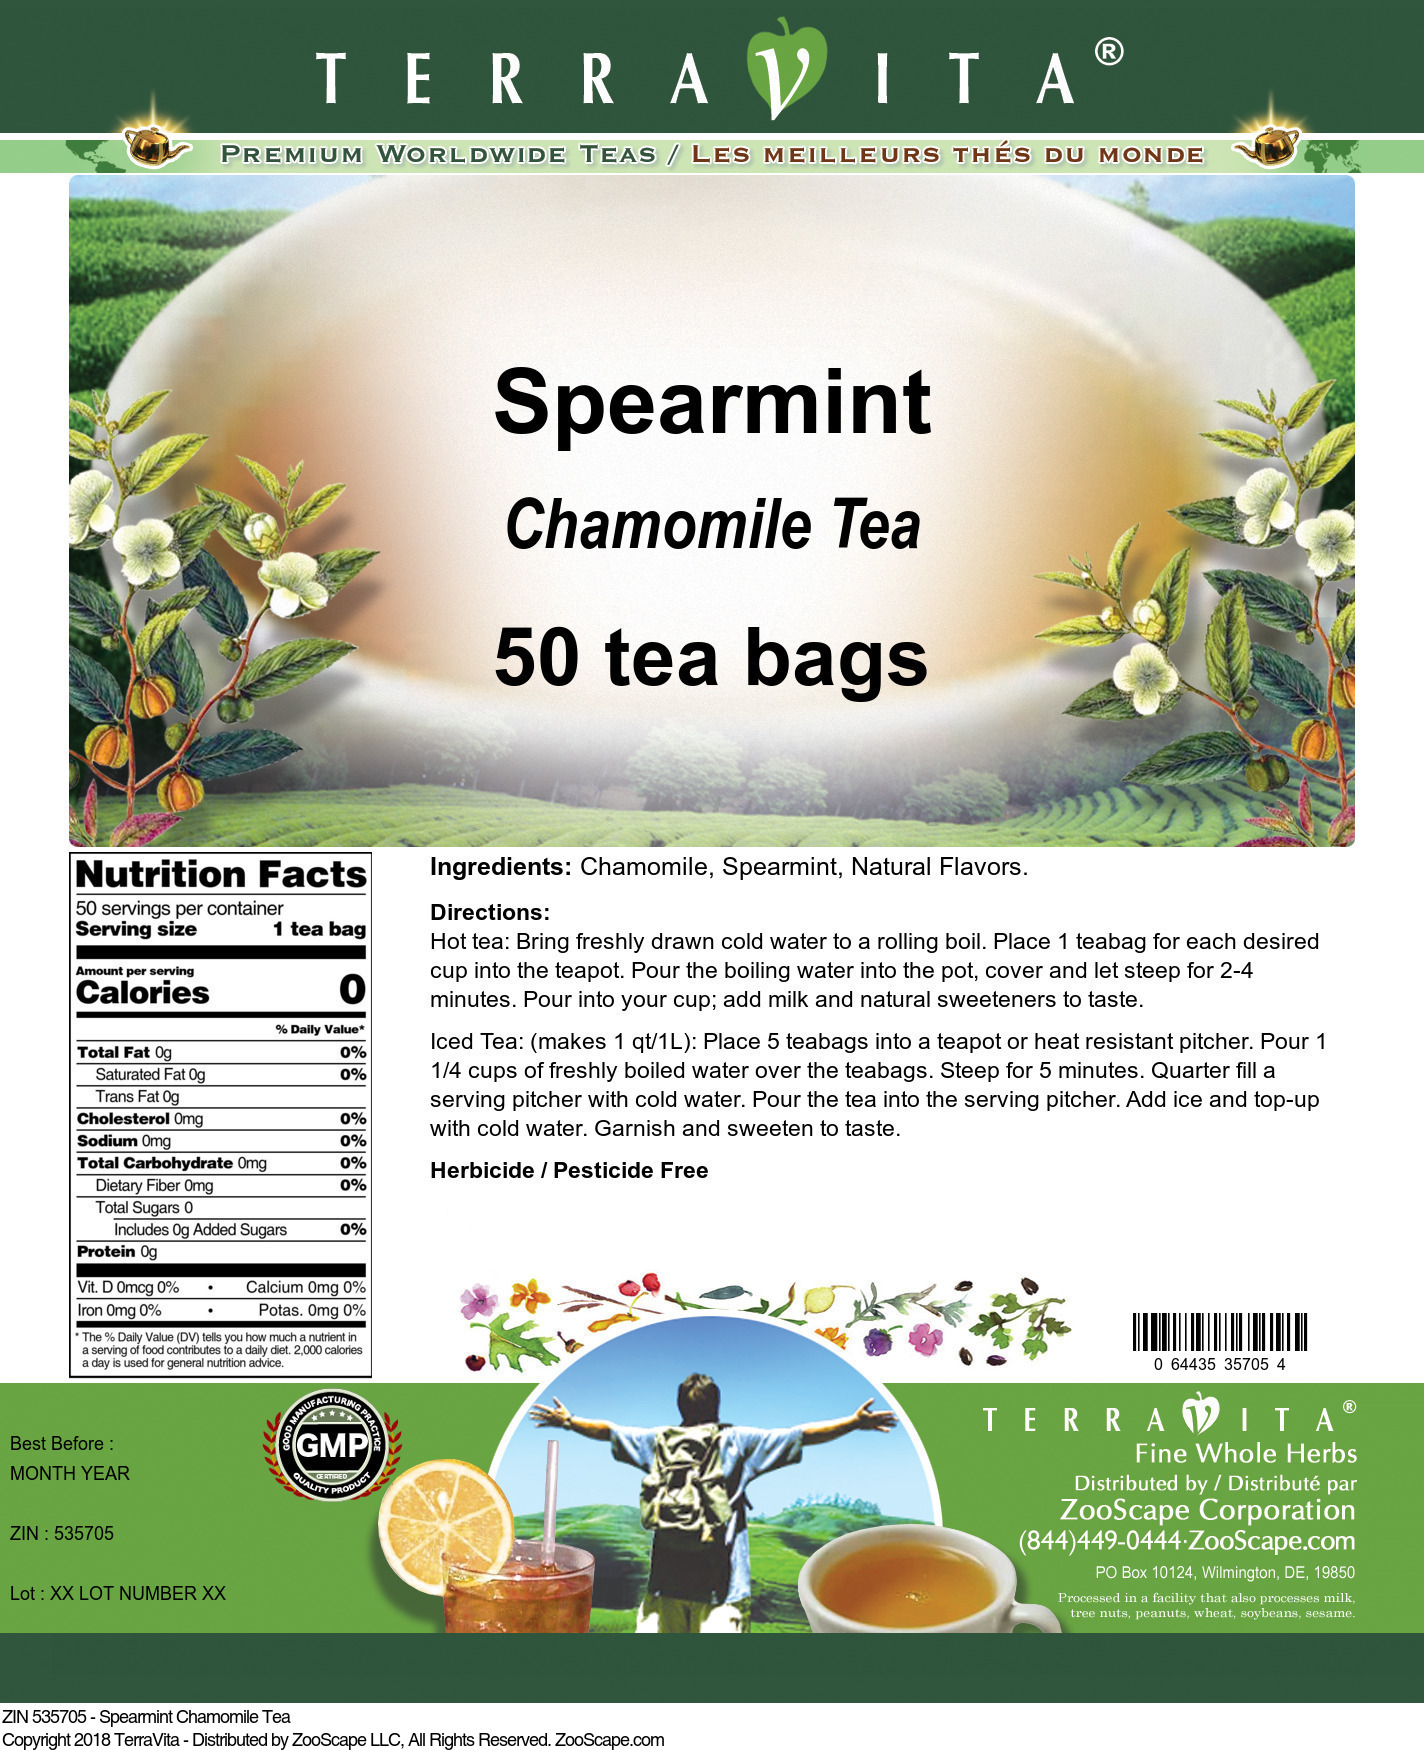 Spearmint Chamomile Tea - Label